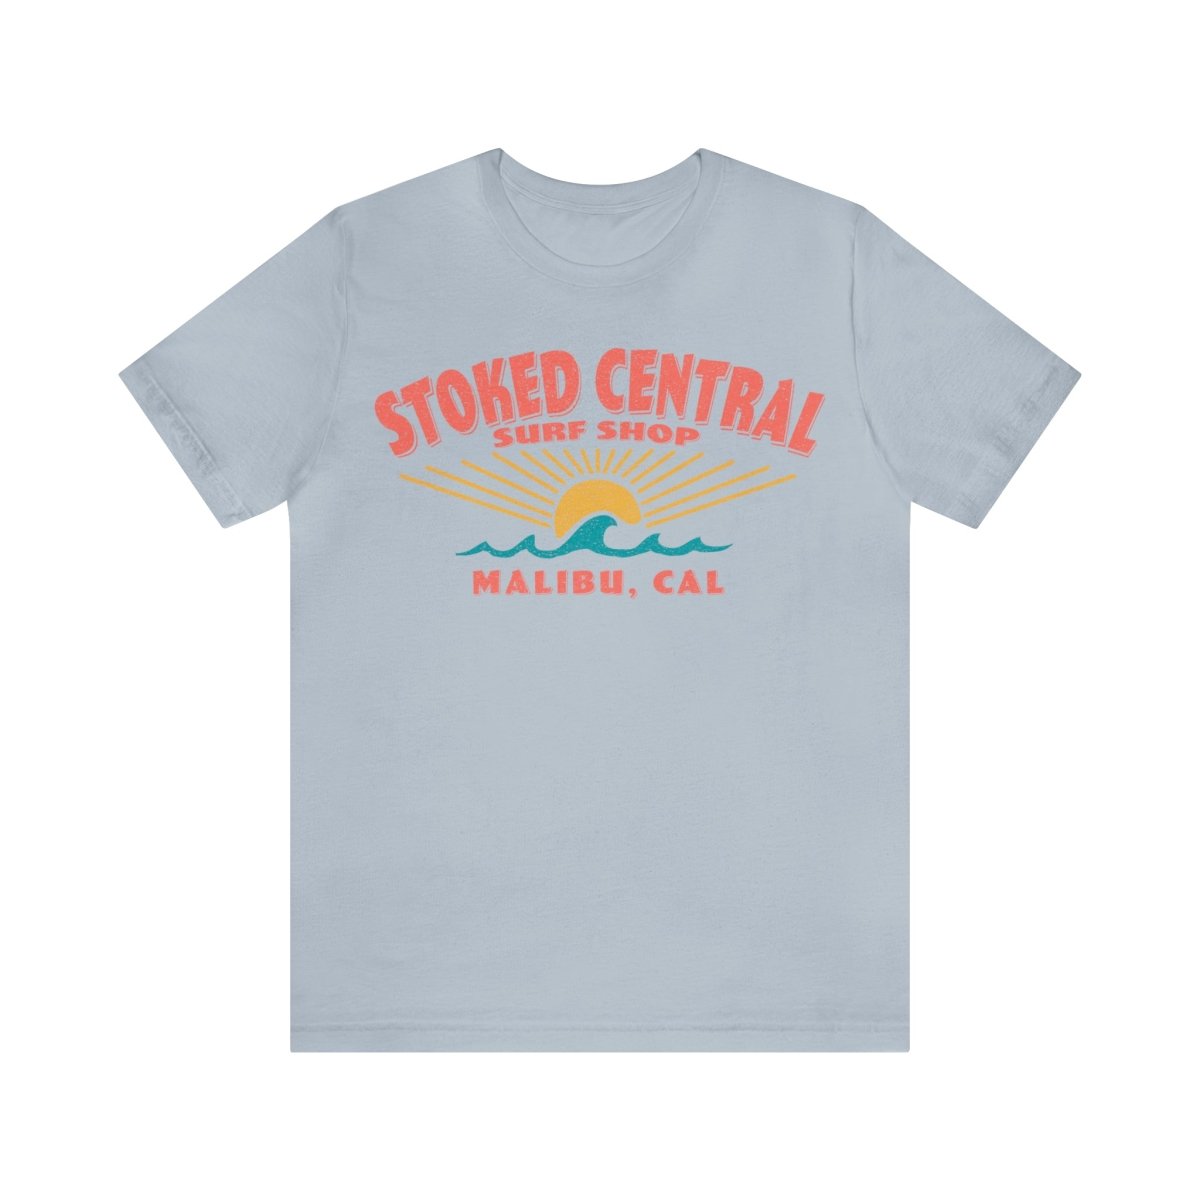 Stoked Central Surf Shop Premium T-Shirt, Malibu, California